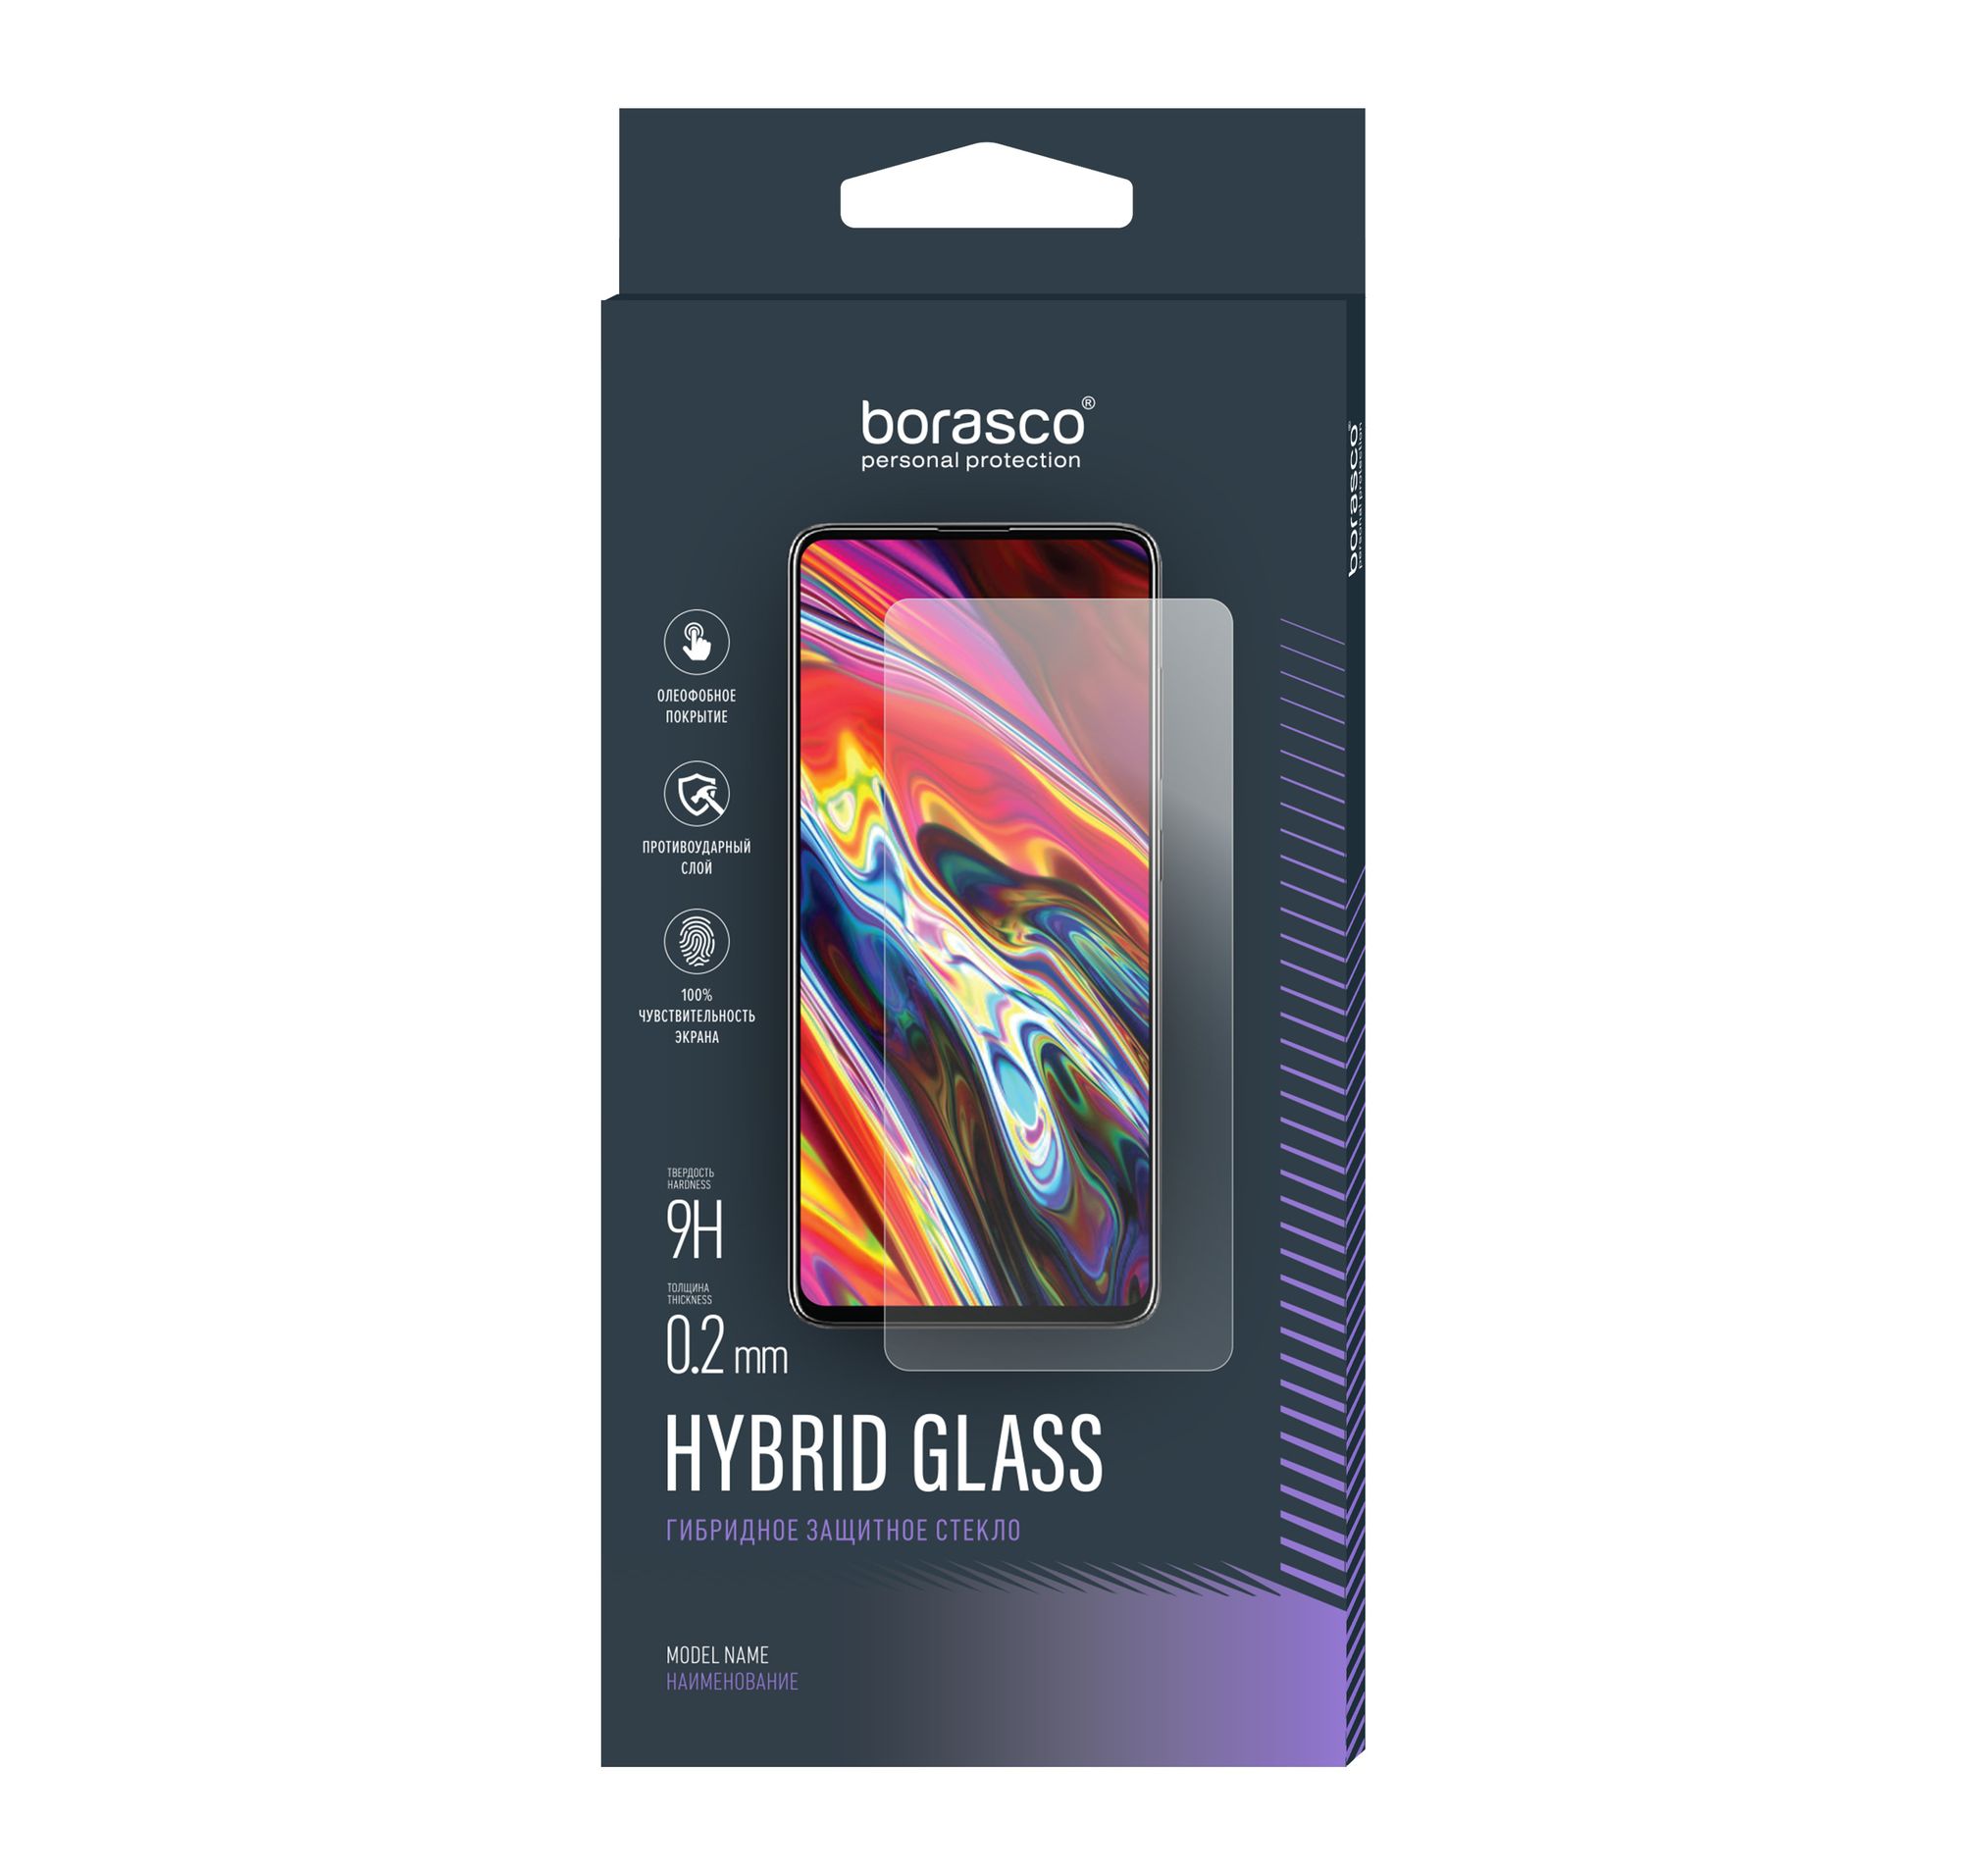 стекло защитное hybrid glass vsp 0 26 мм universal 7 Стекло защитное Hybrid Glass VSP 0,26 мм для Universal 4,5